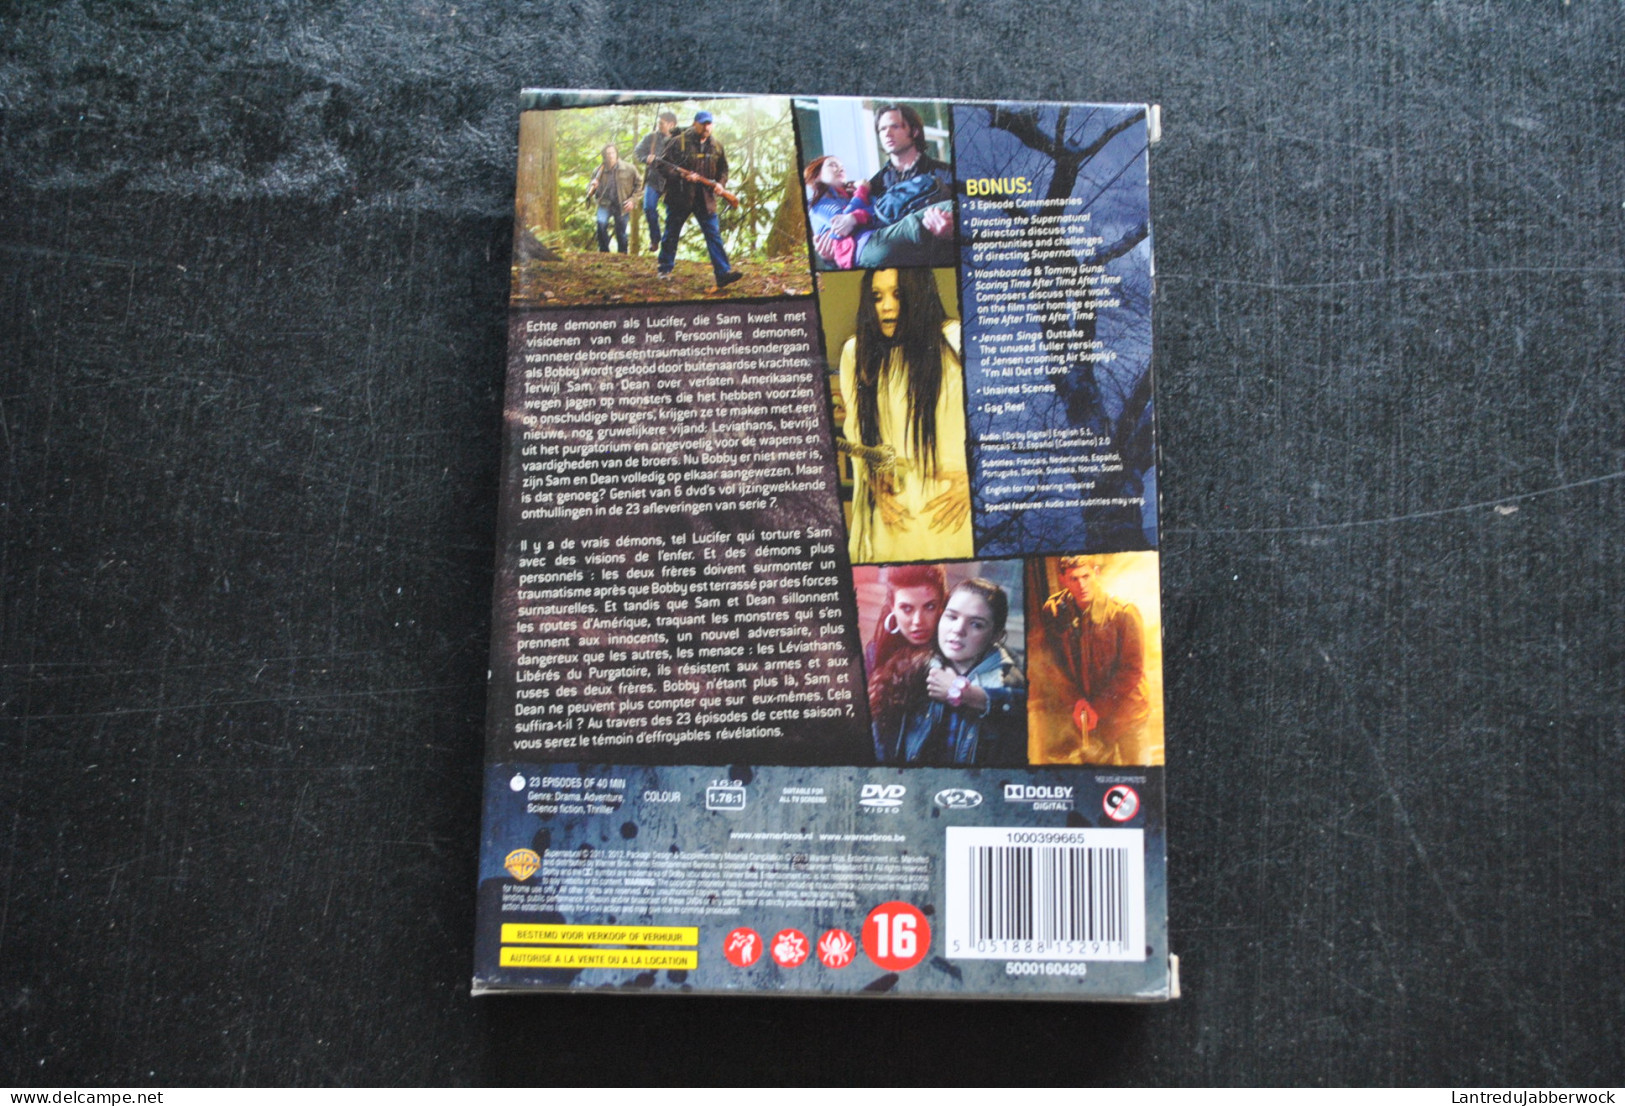 Intégrale DVD Supernatural Saison 7 COMPLET - Sciencefiction En Fantasy